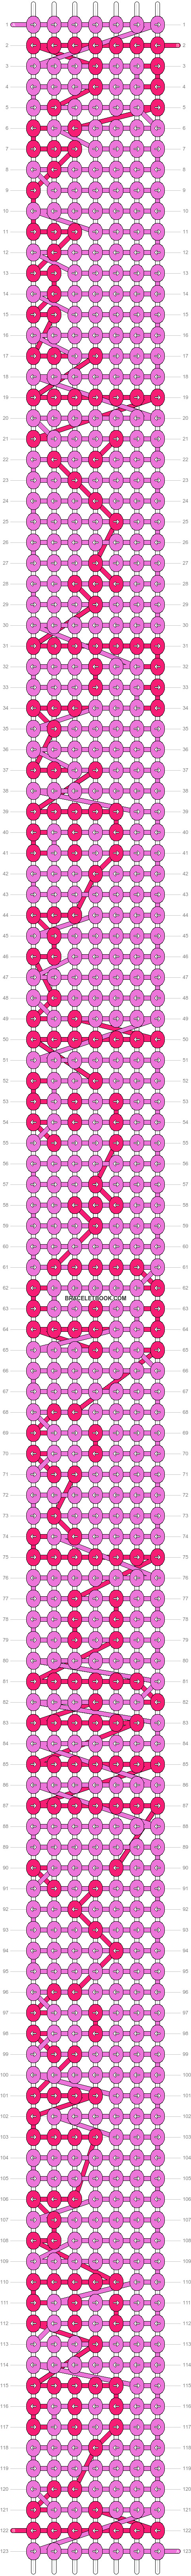 Alpha pattern #1875 pattern